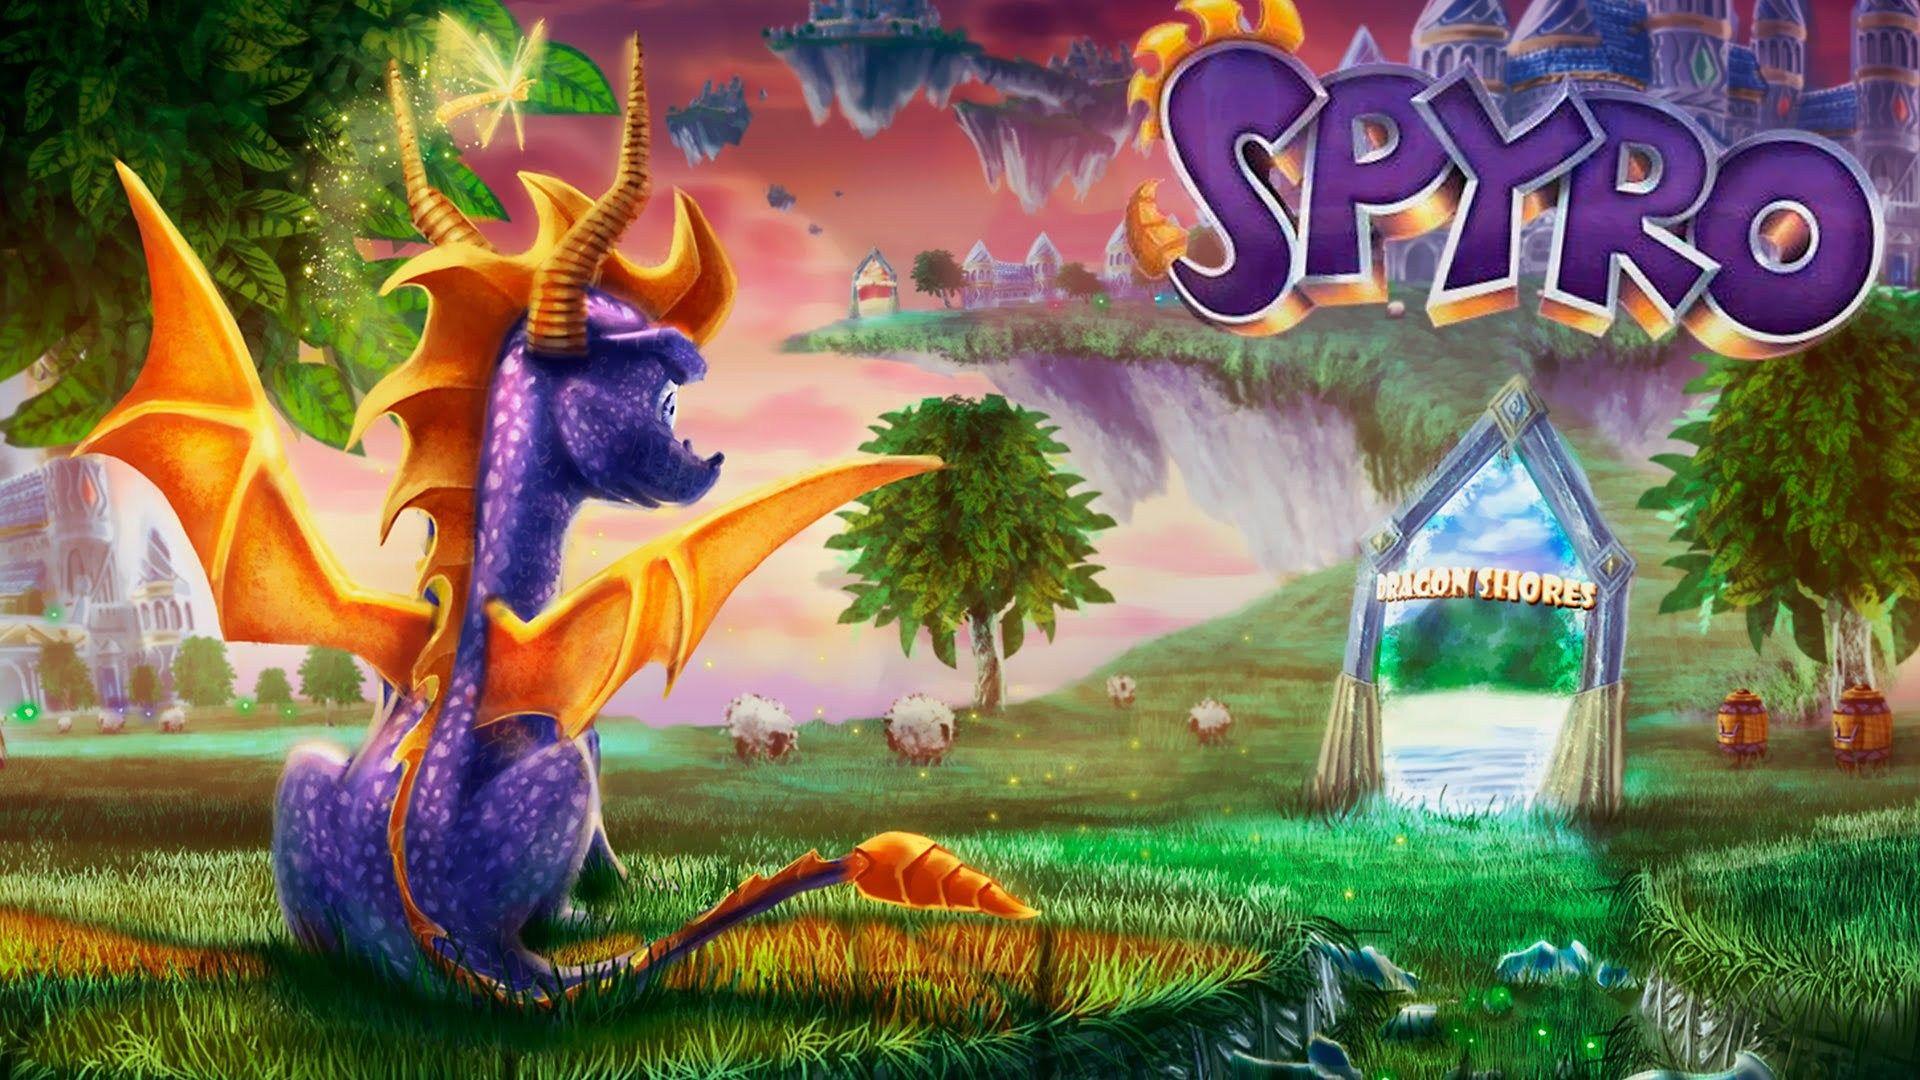 Save Spyro Reignited Trilogy HD Wallpaper. Read games reviews